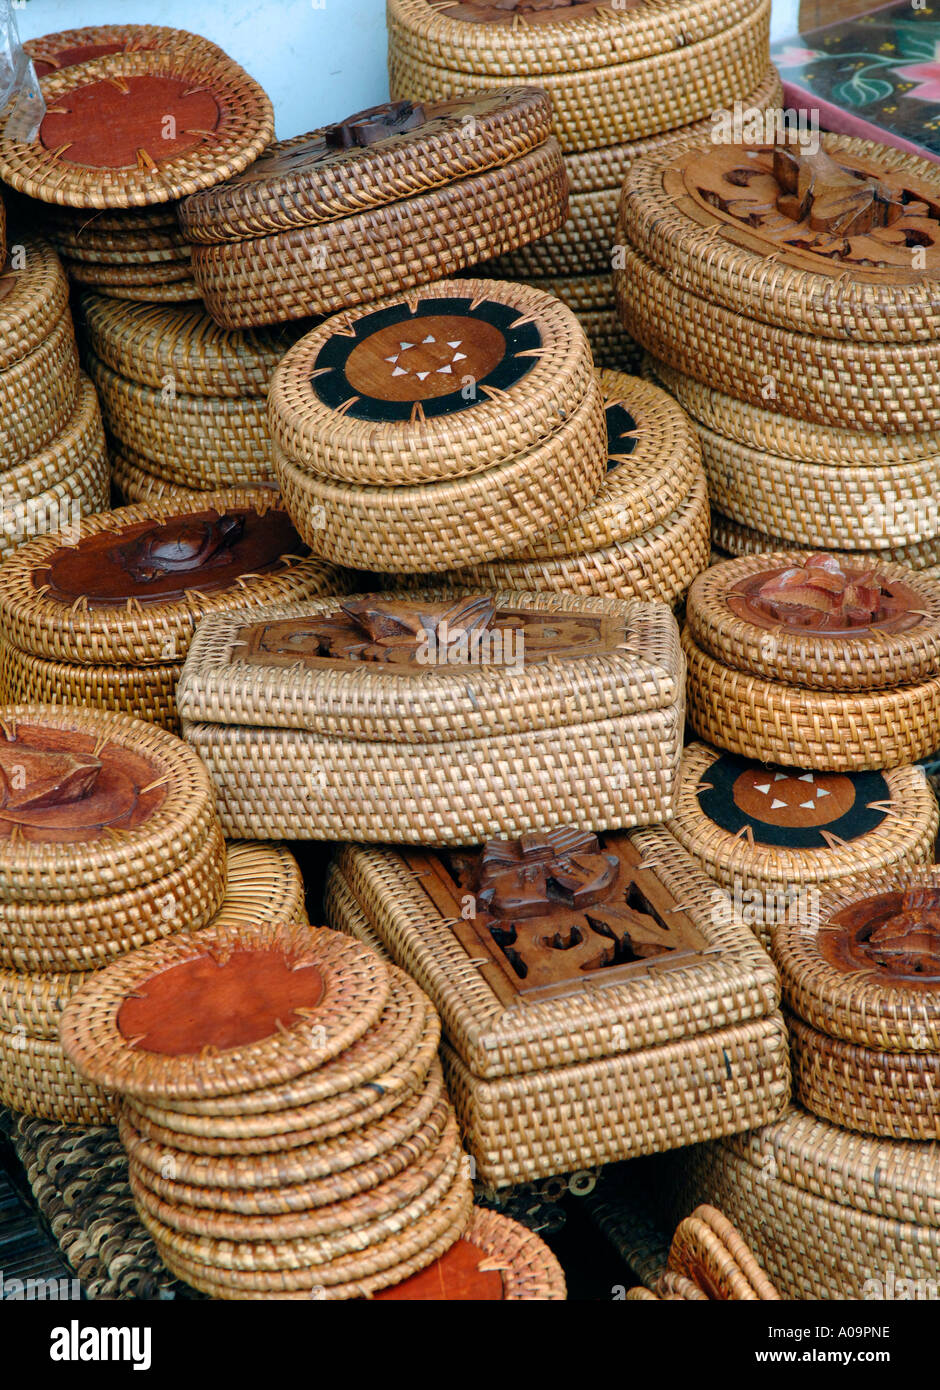 Wicker baskets, market stall Singaraja town, North Bali Indonesia Stock Photo